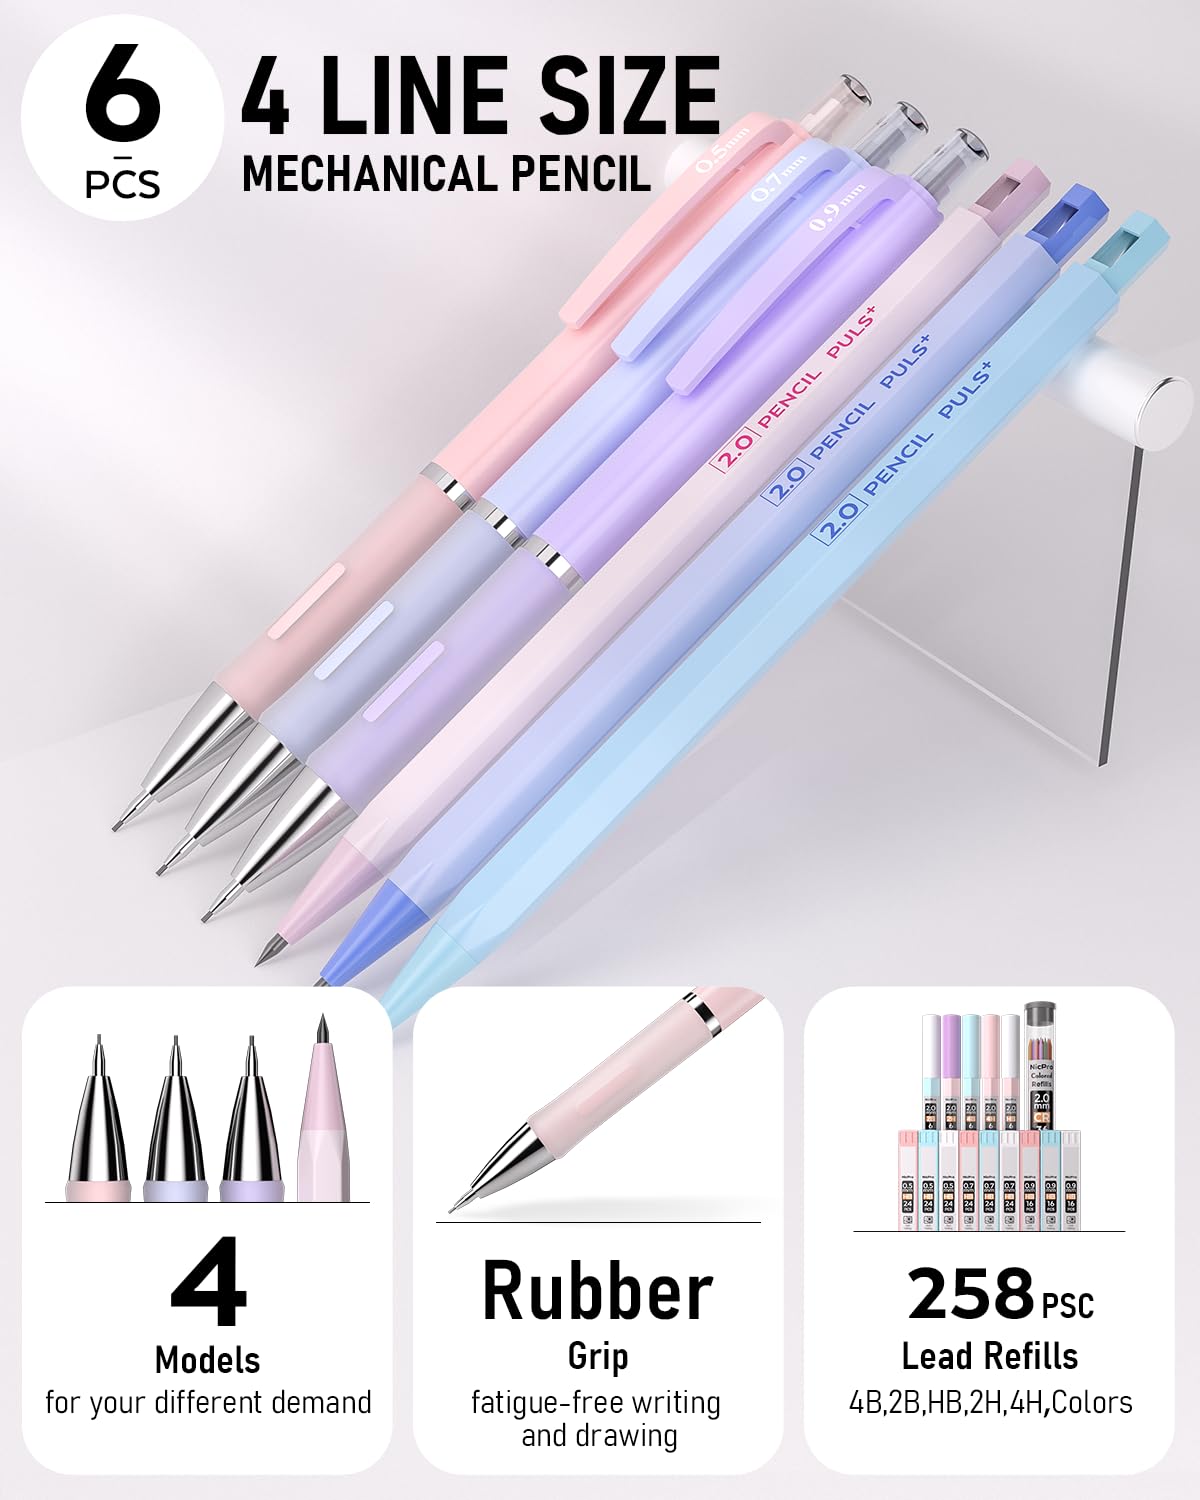 Nicpro Pastel Mechanical Pencil Set, 6 PCS Cute Aesthetic Mechanical P